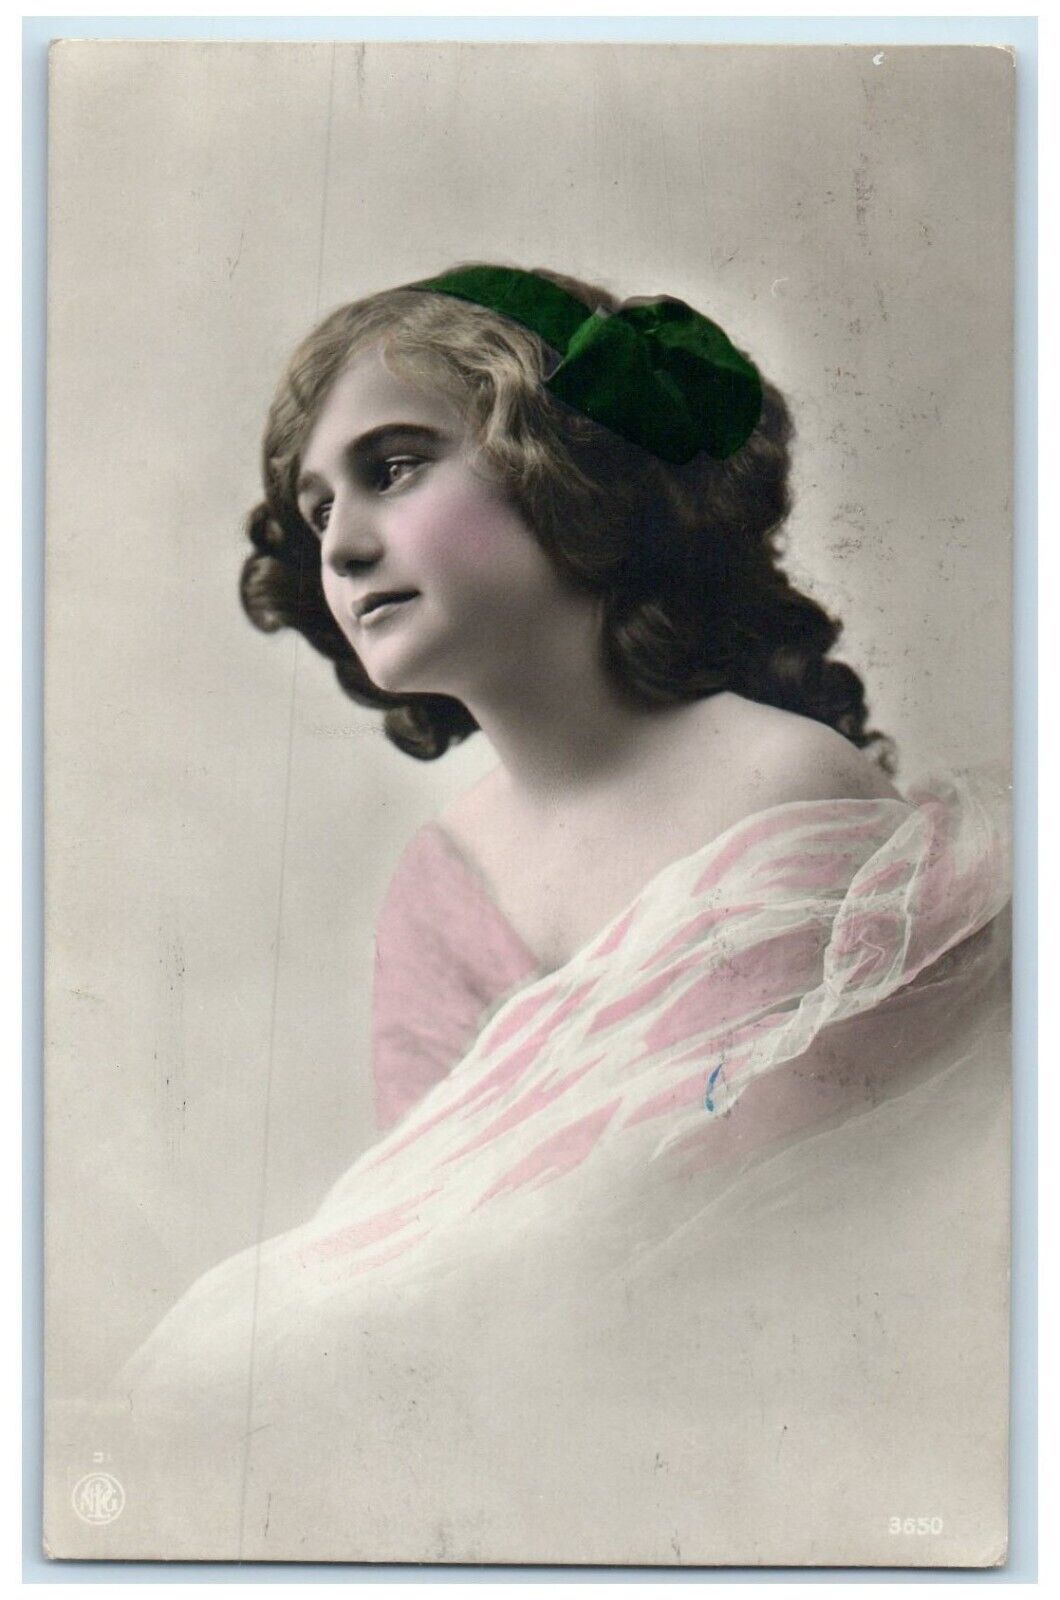 1916 Pretty Girl Curly Hair Studio Portrait Chicago Illinois RPPC Photo Postcard